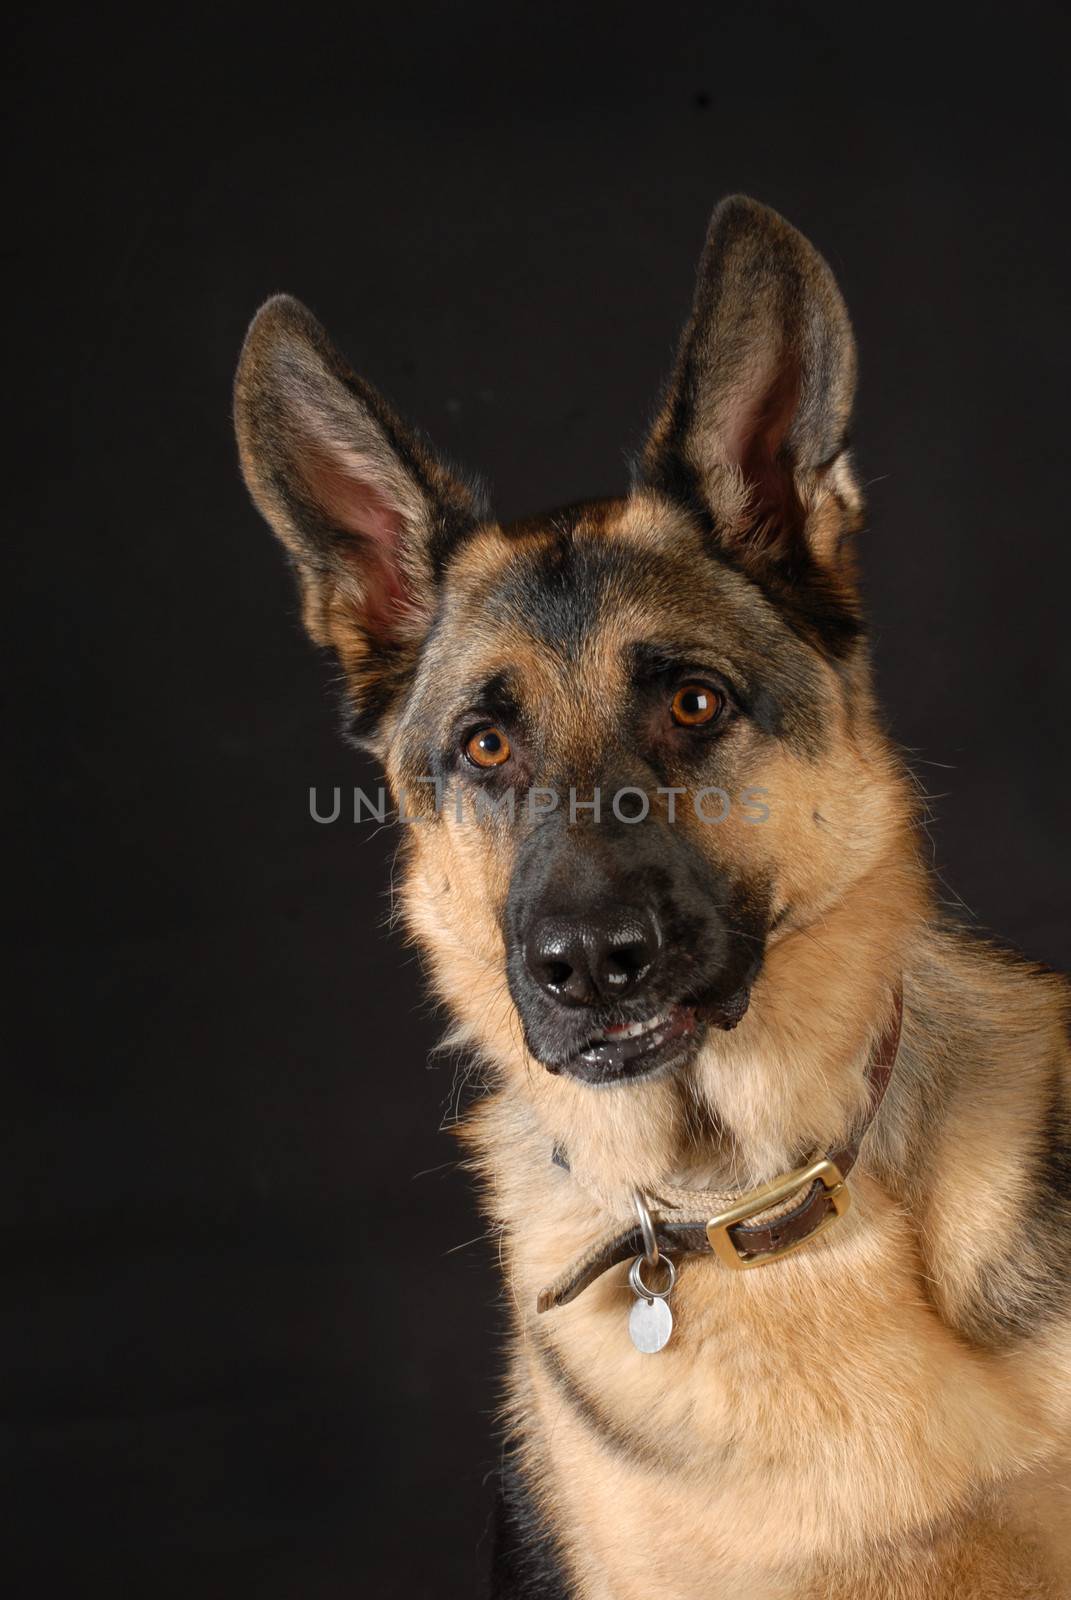 protective dog - german shepherd dog with teeth bared on black background 